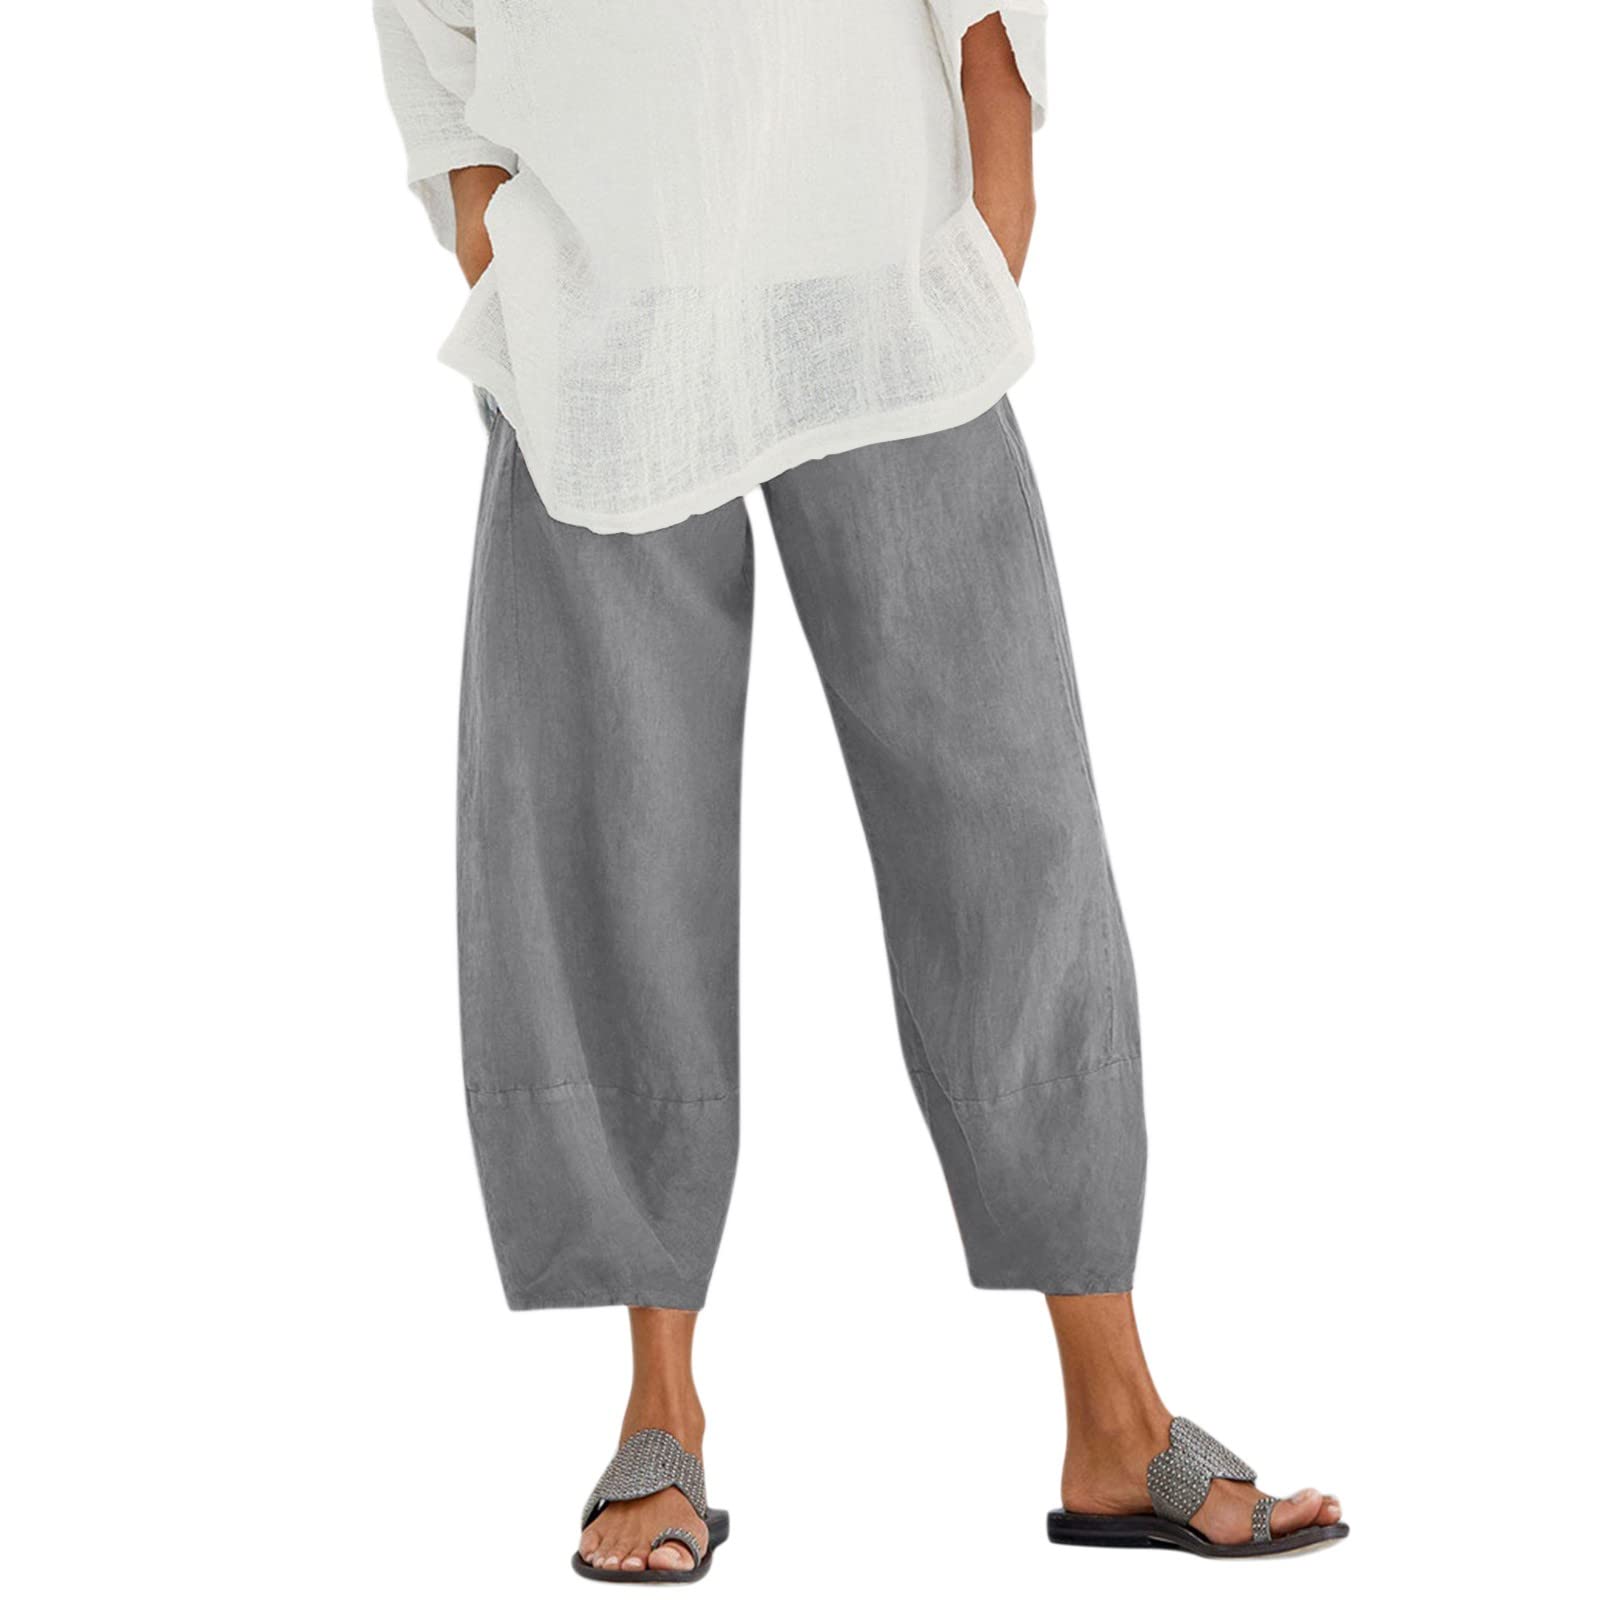 Linen Palazzo Pants for Women,Women's Casual Summer Capri Pants